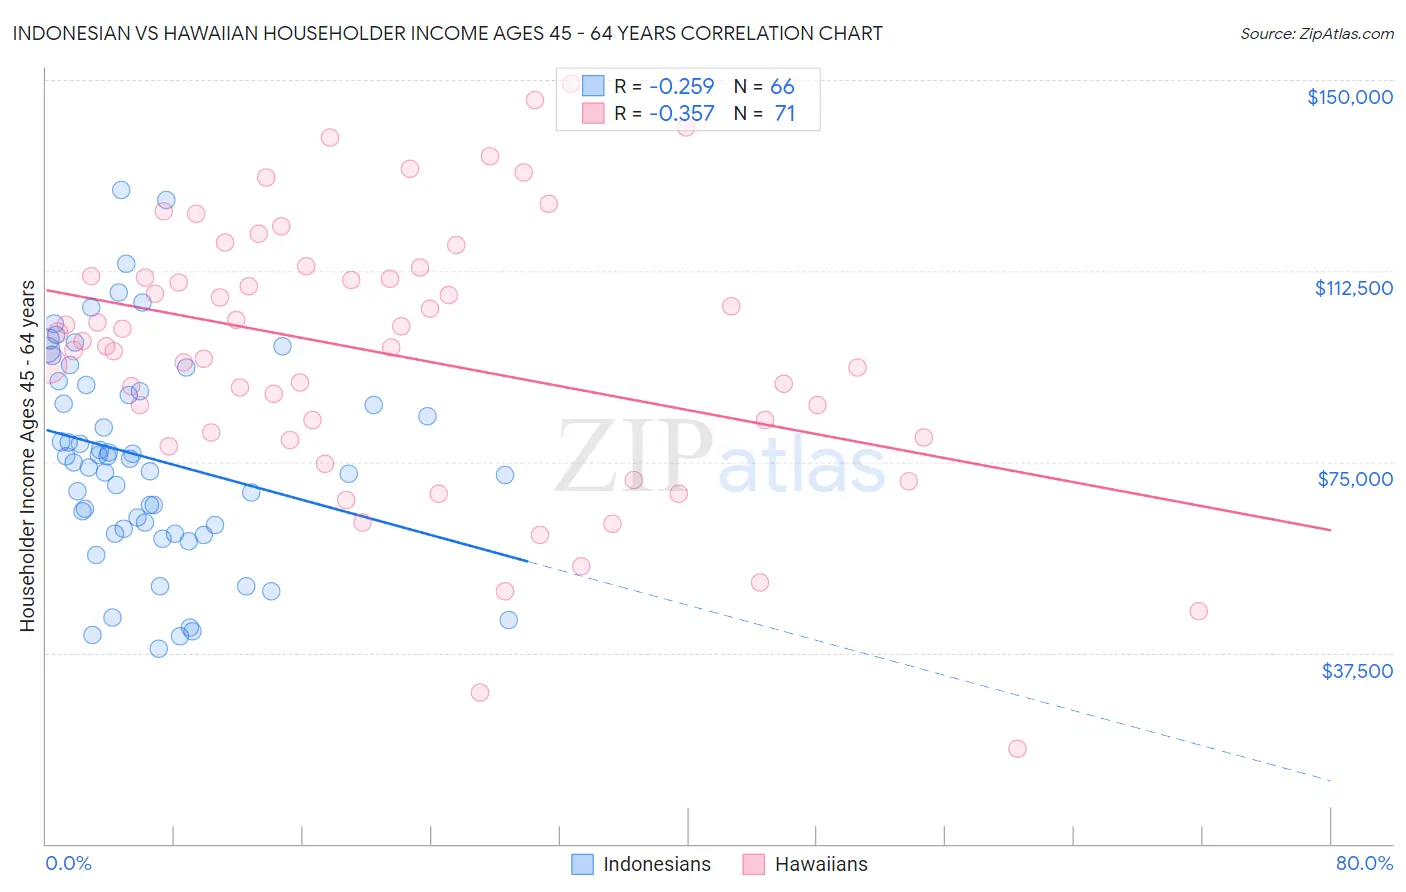 Indonesian vs Hawaiian Householder Income Ages 45 - 64 years